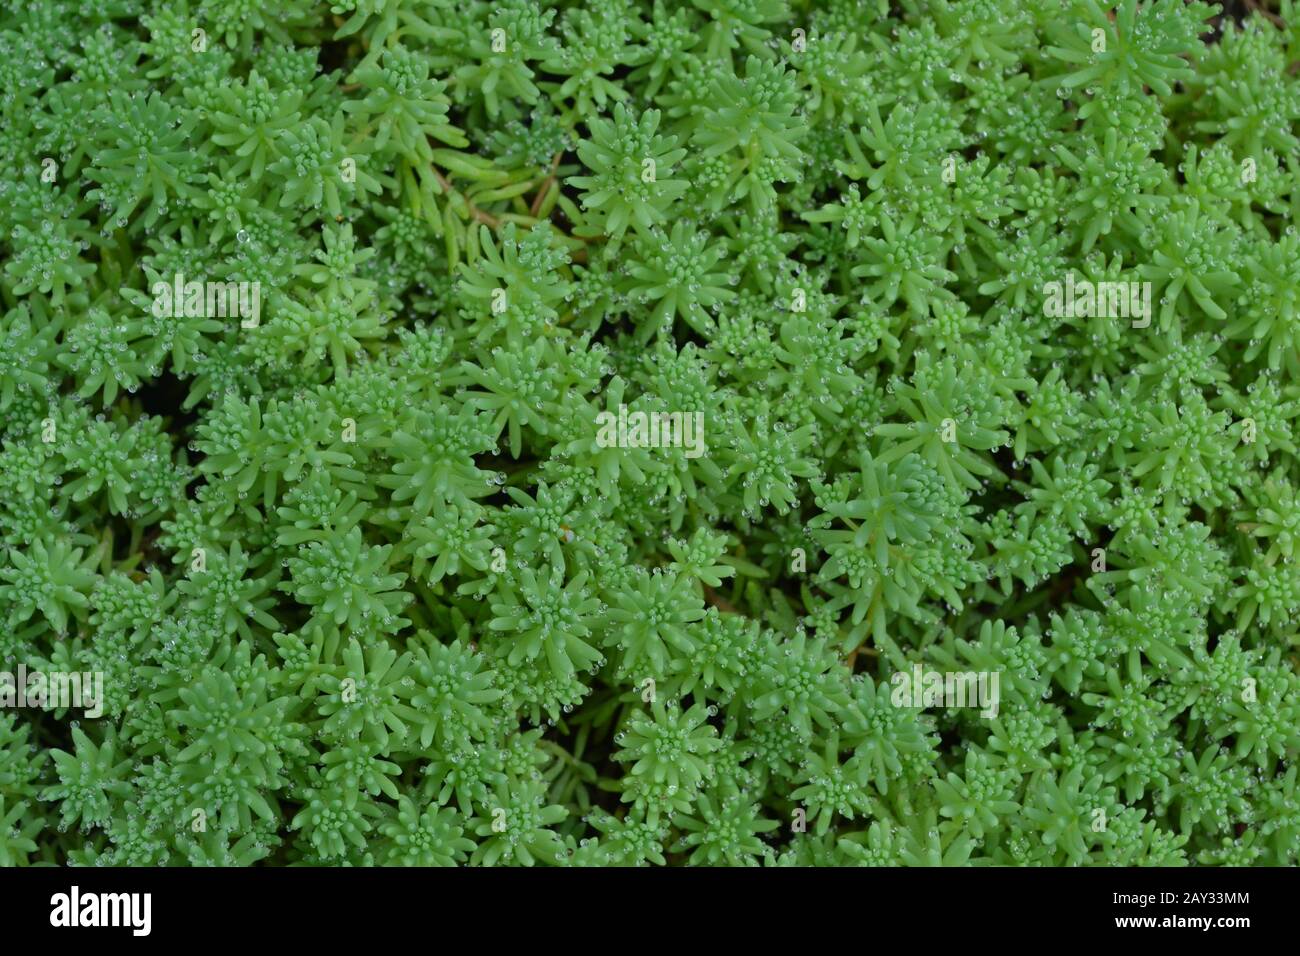 Stonecrop. Hare cabbage. Sedum. Green moss. Decorative grassy carpet. Flowerbed, garden. Close-up Stock Photo